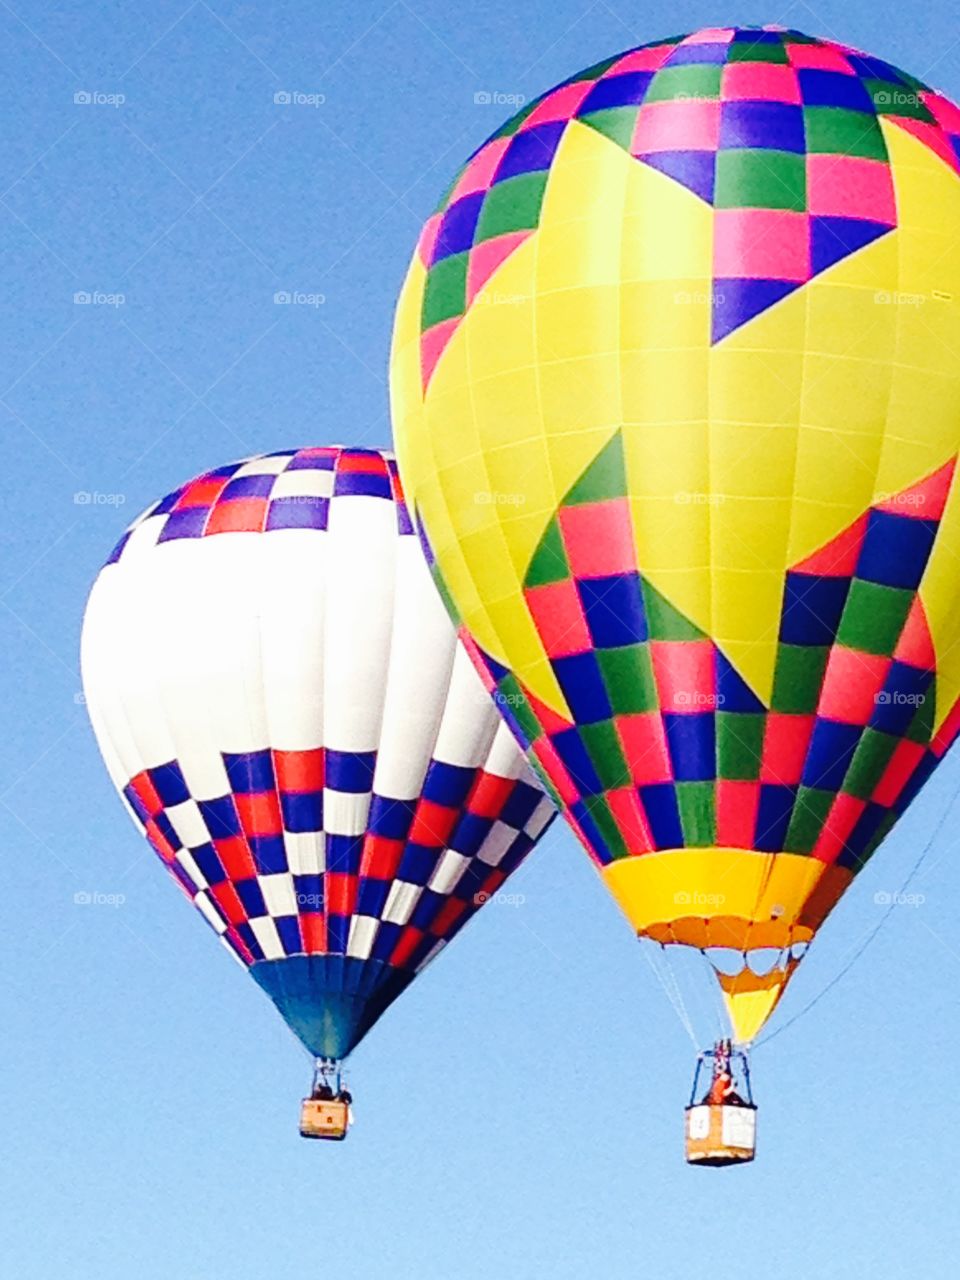 Hot air balloons taking off Statesville North Carolina. 